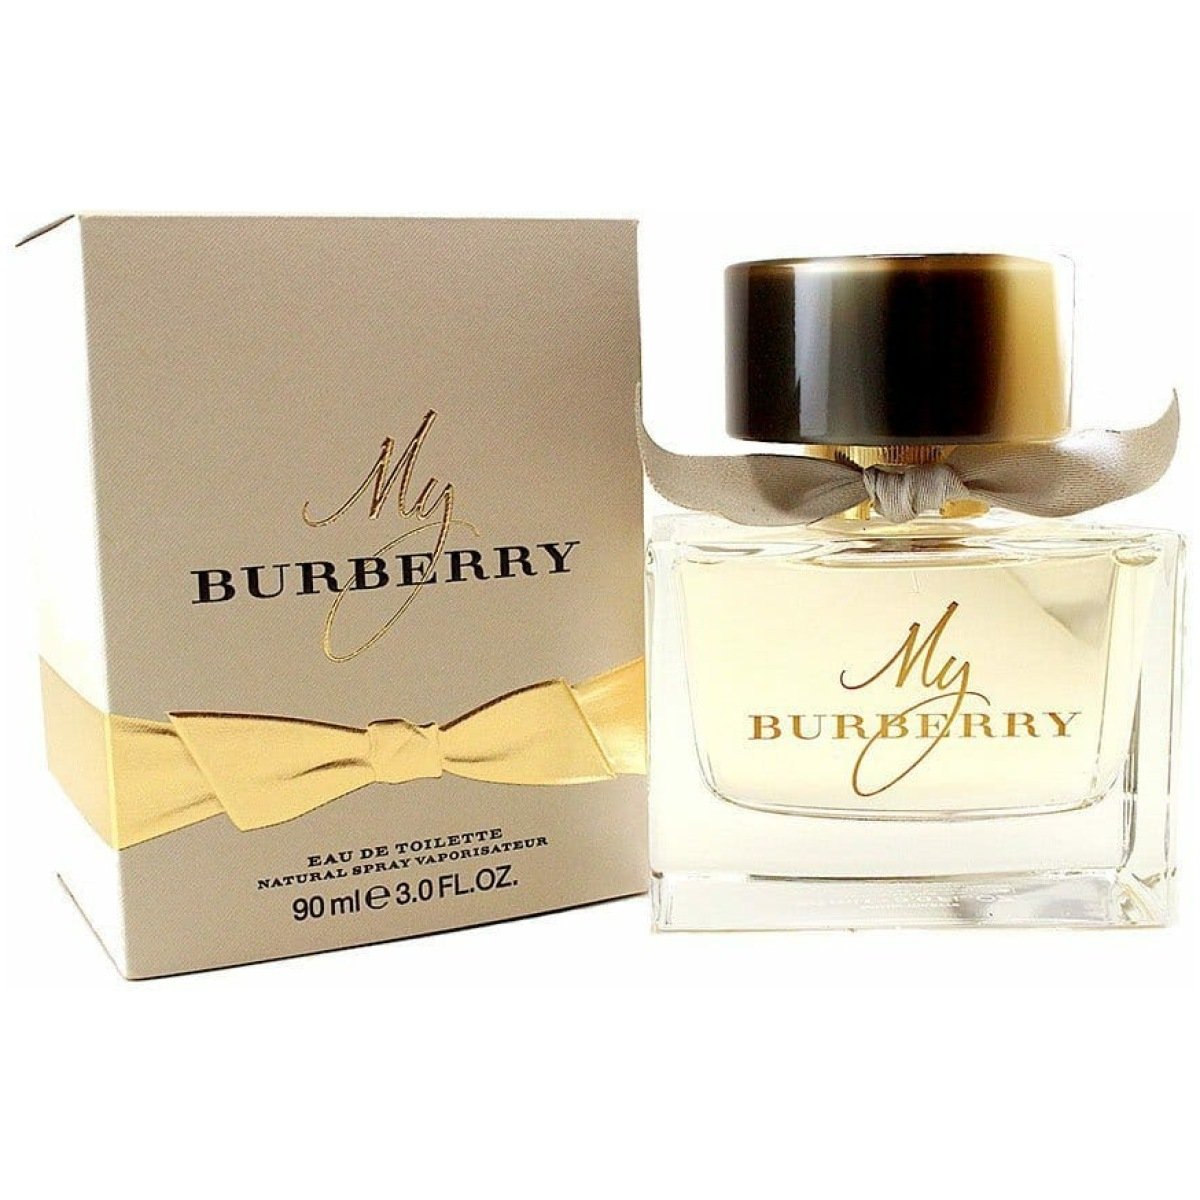 Burberry My Burberry EDT Perfume For Women 90ml